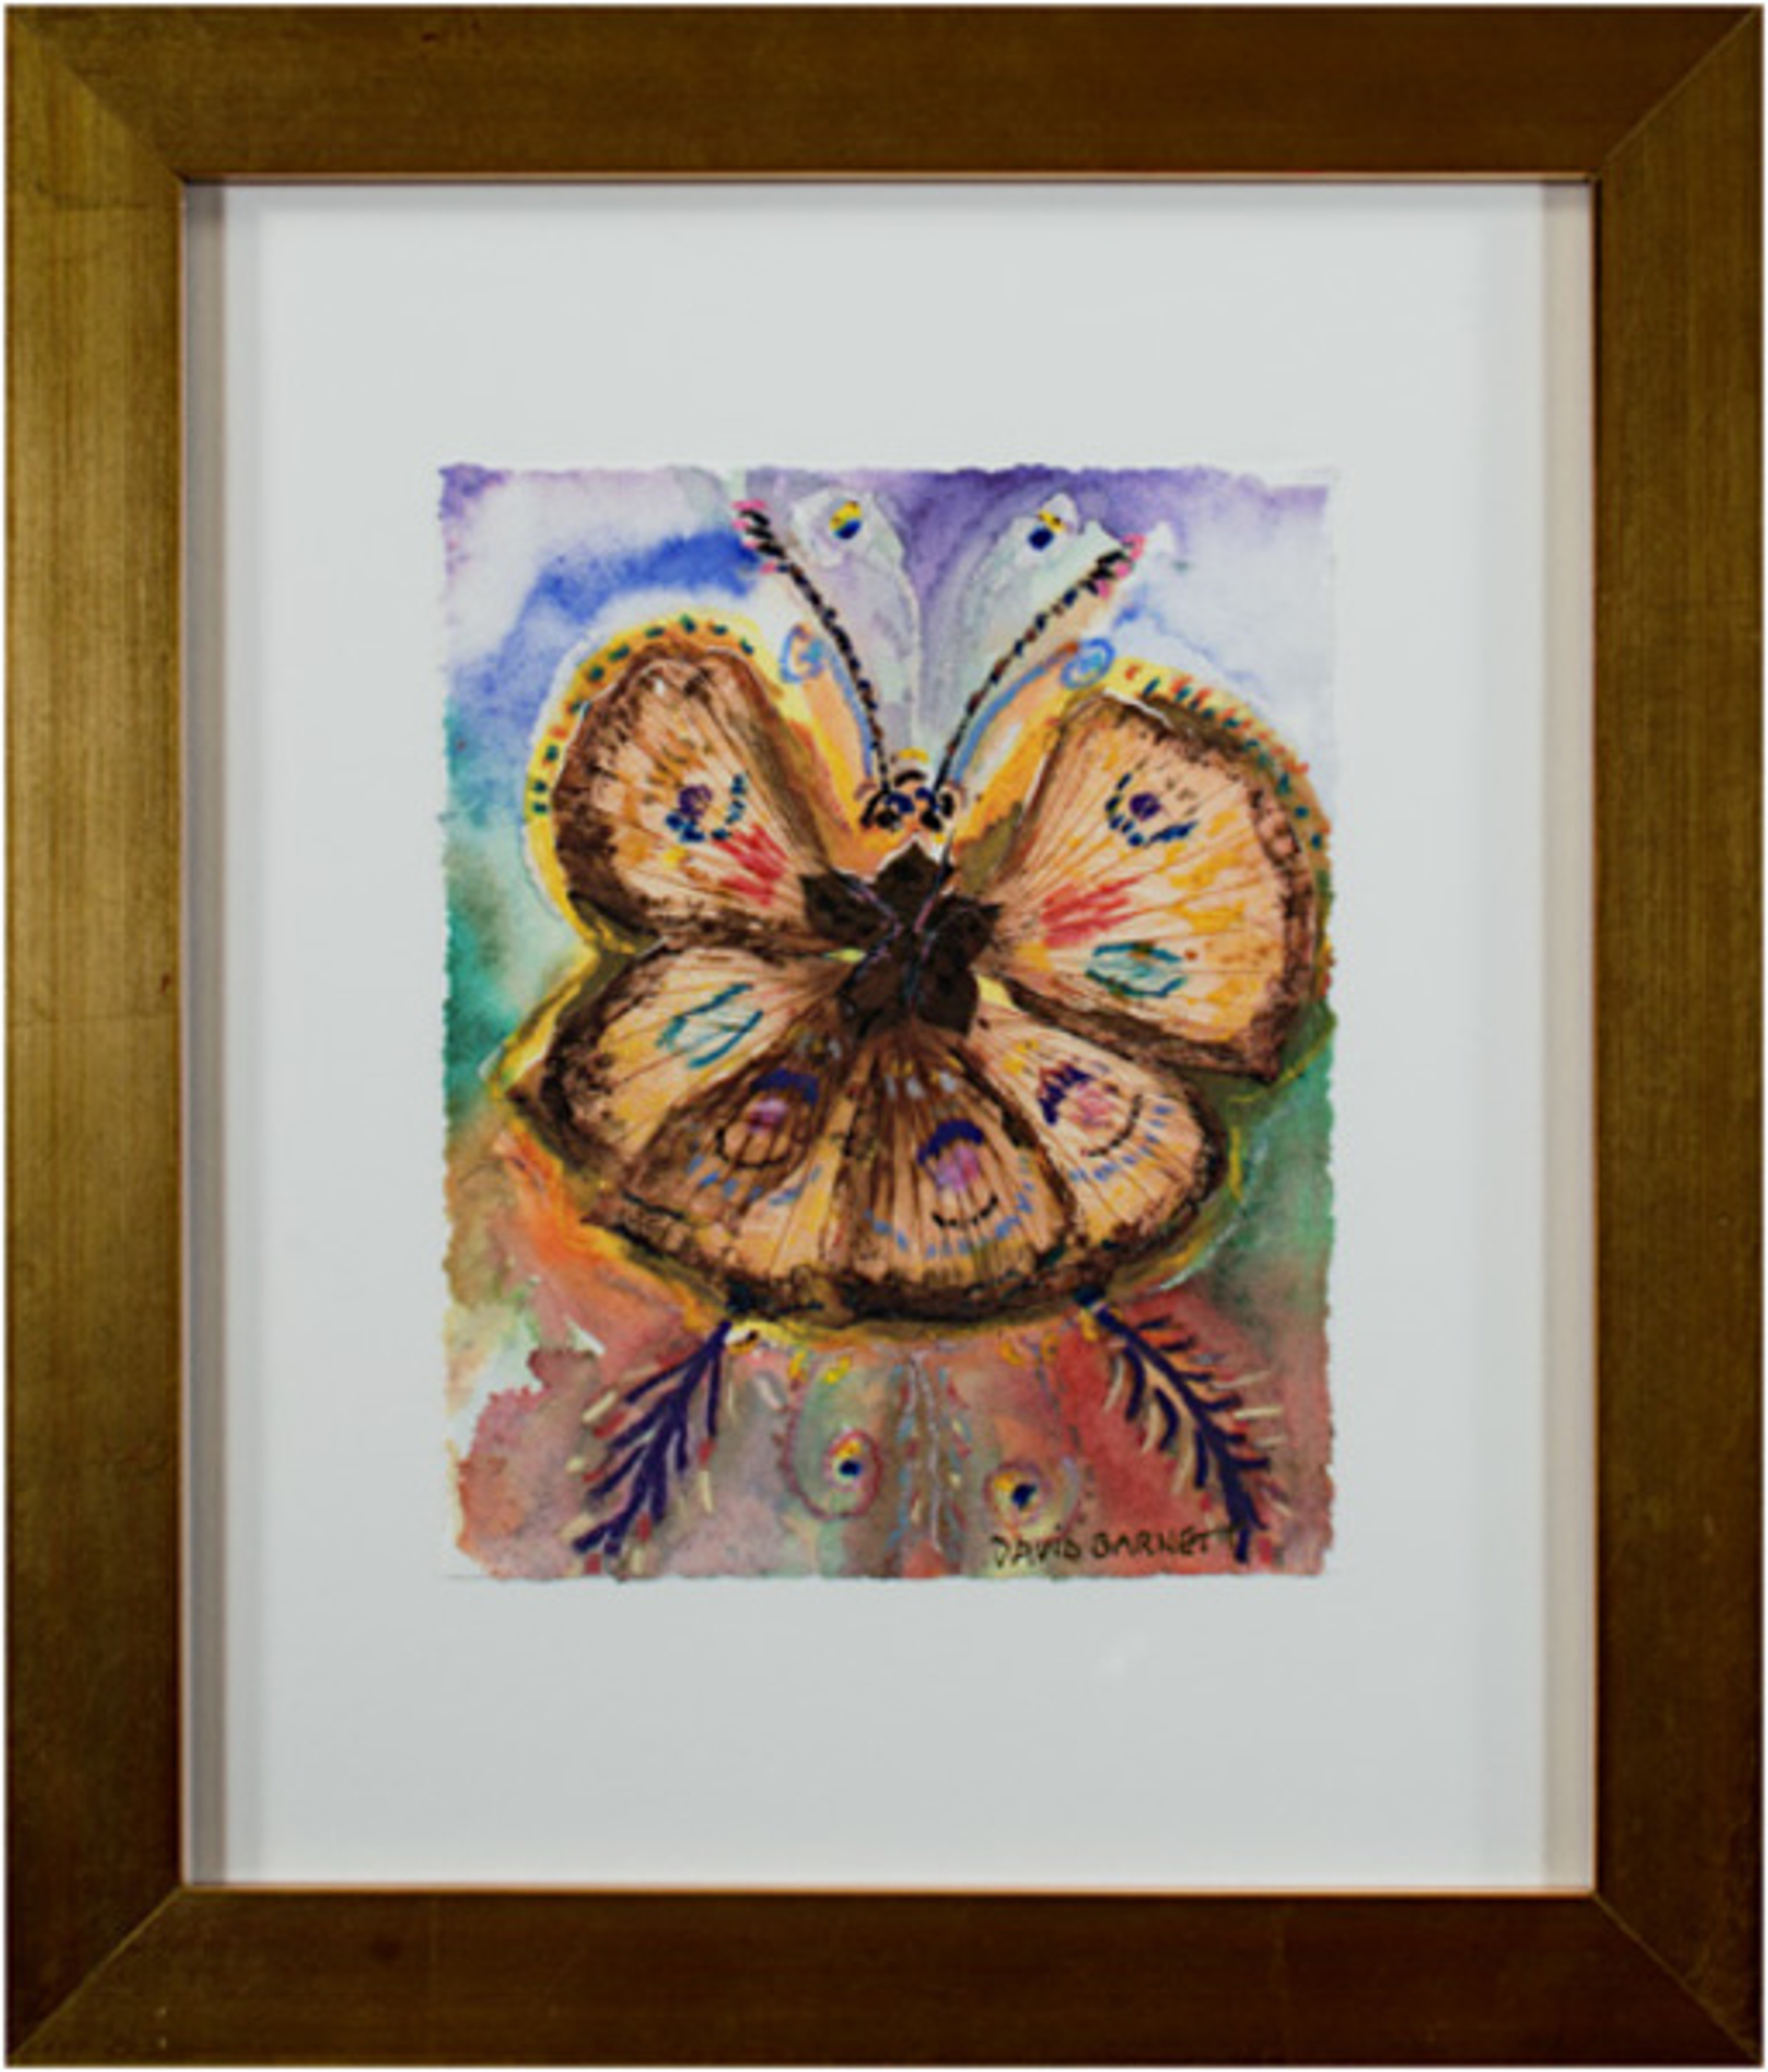 Giant Hybrid Hibiscus Butterfly by David Barnett